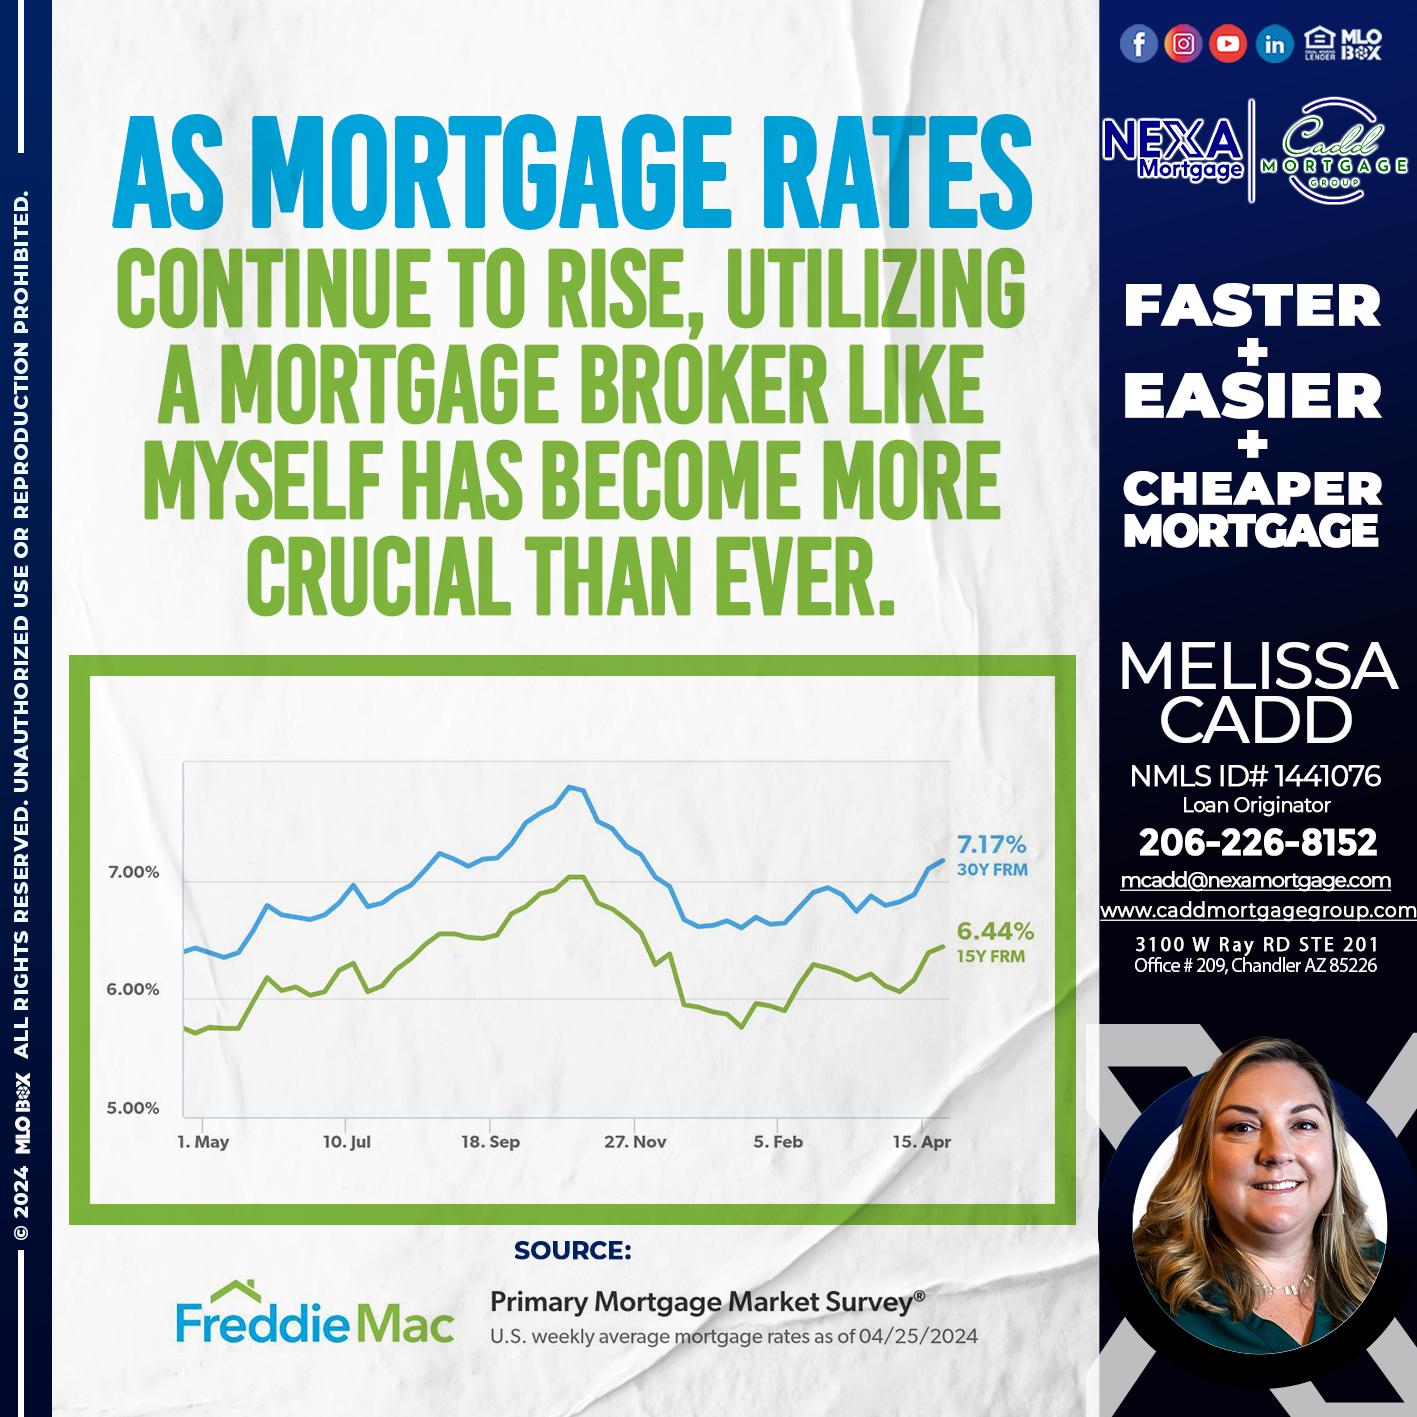 mortgage rates - Melissa Cadd -Loan Originator